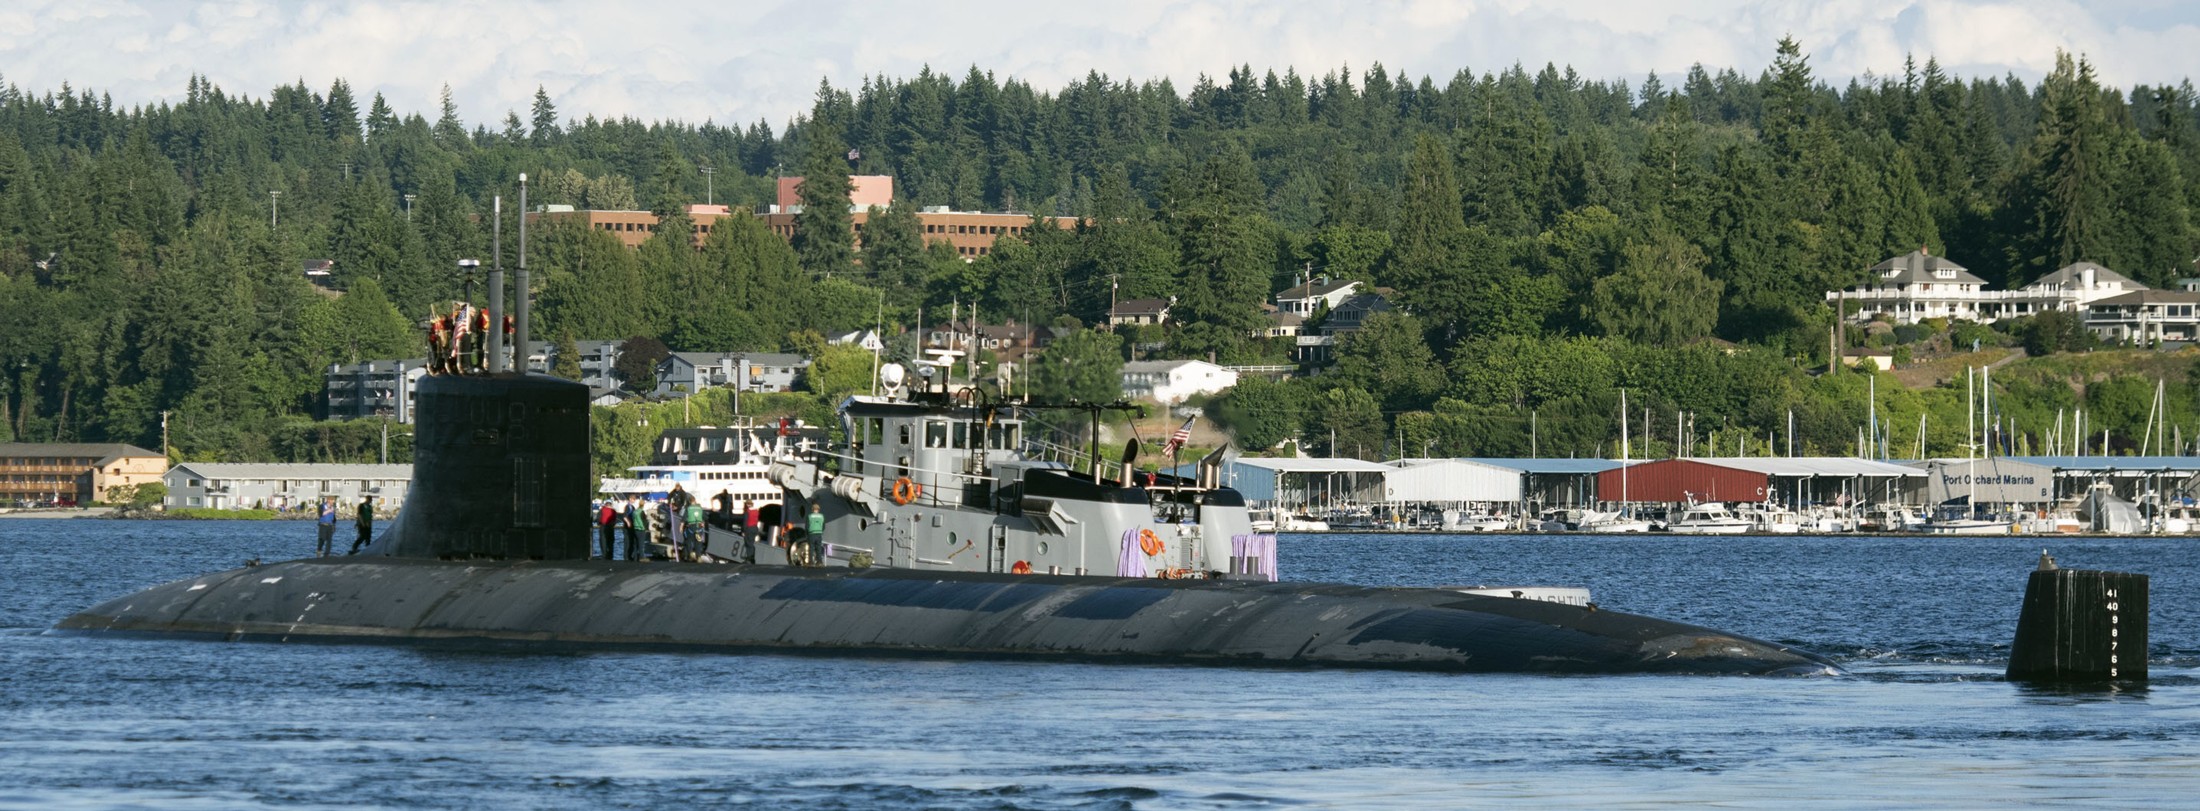 ssn-21 uss seawolf attack submarine us navy naval base kitsap bremerton washington 26